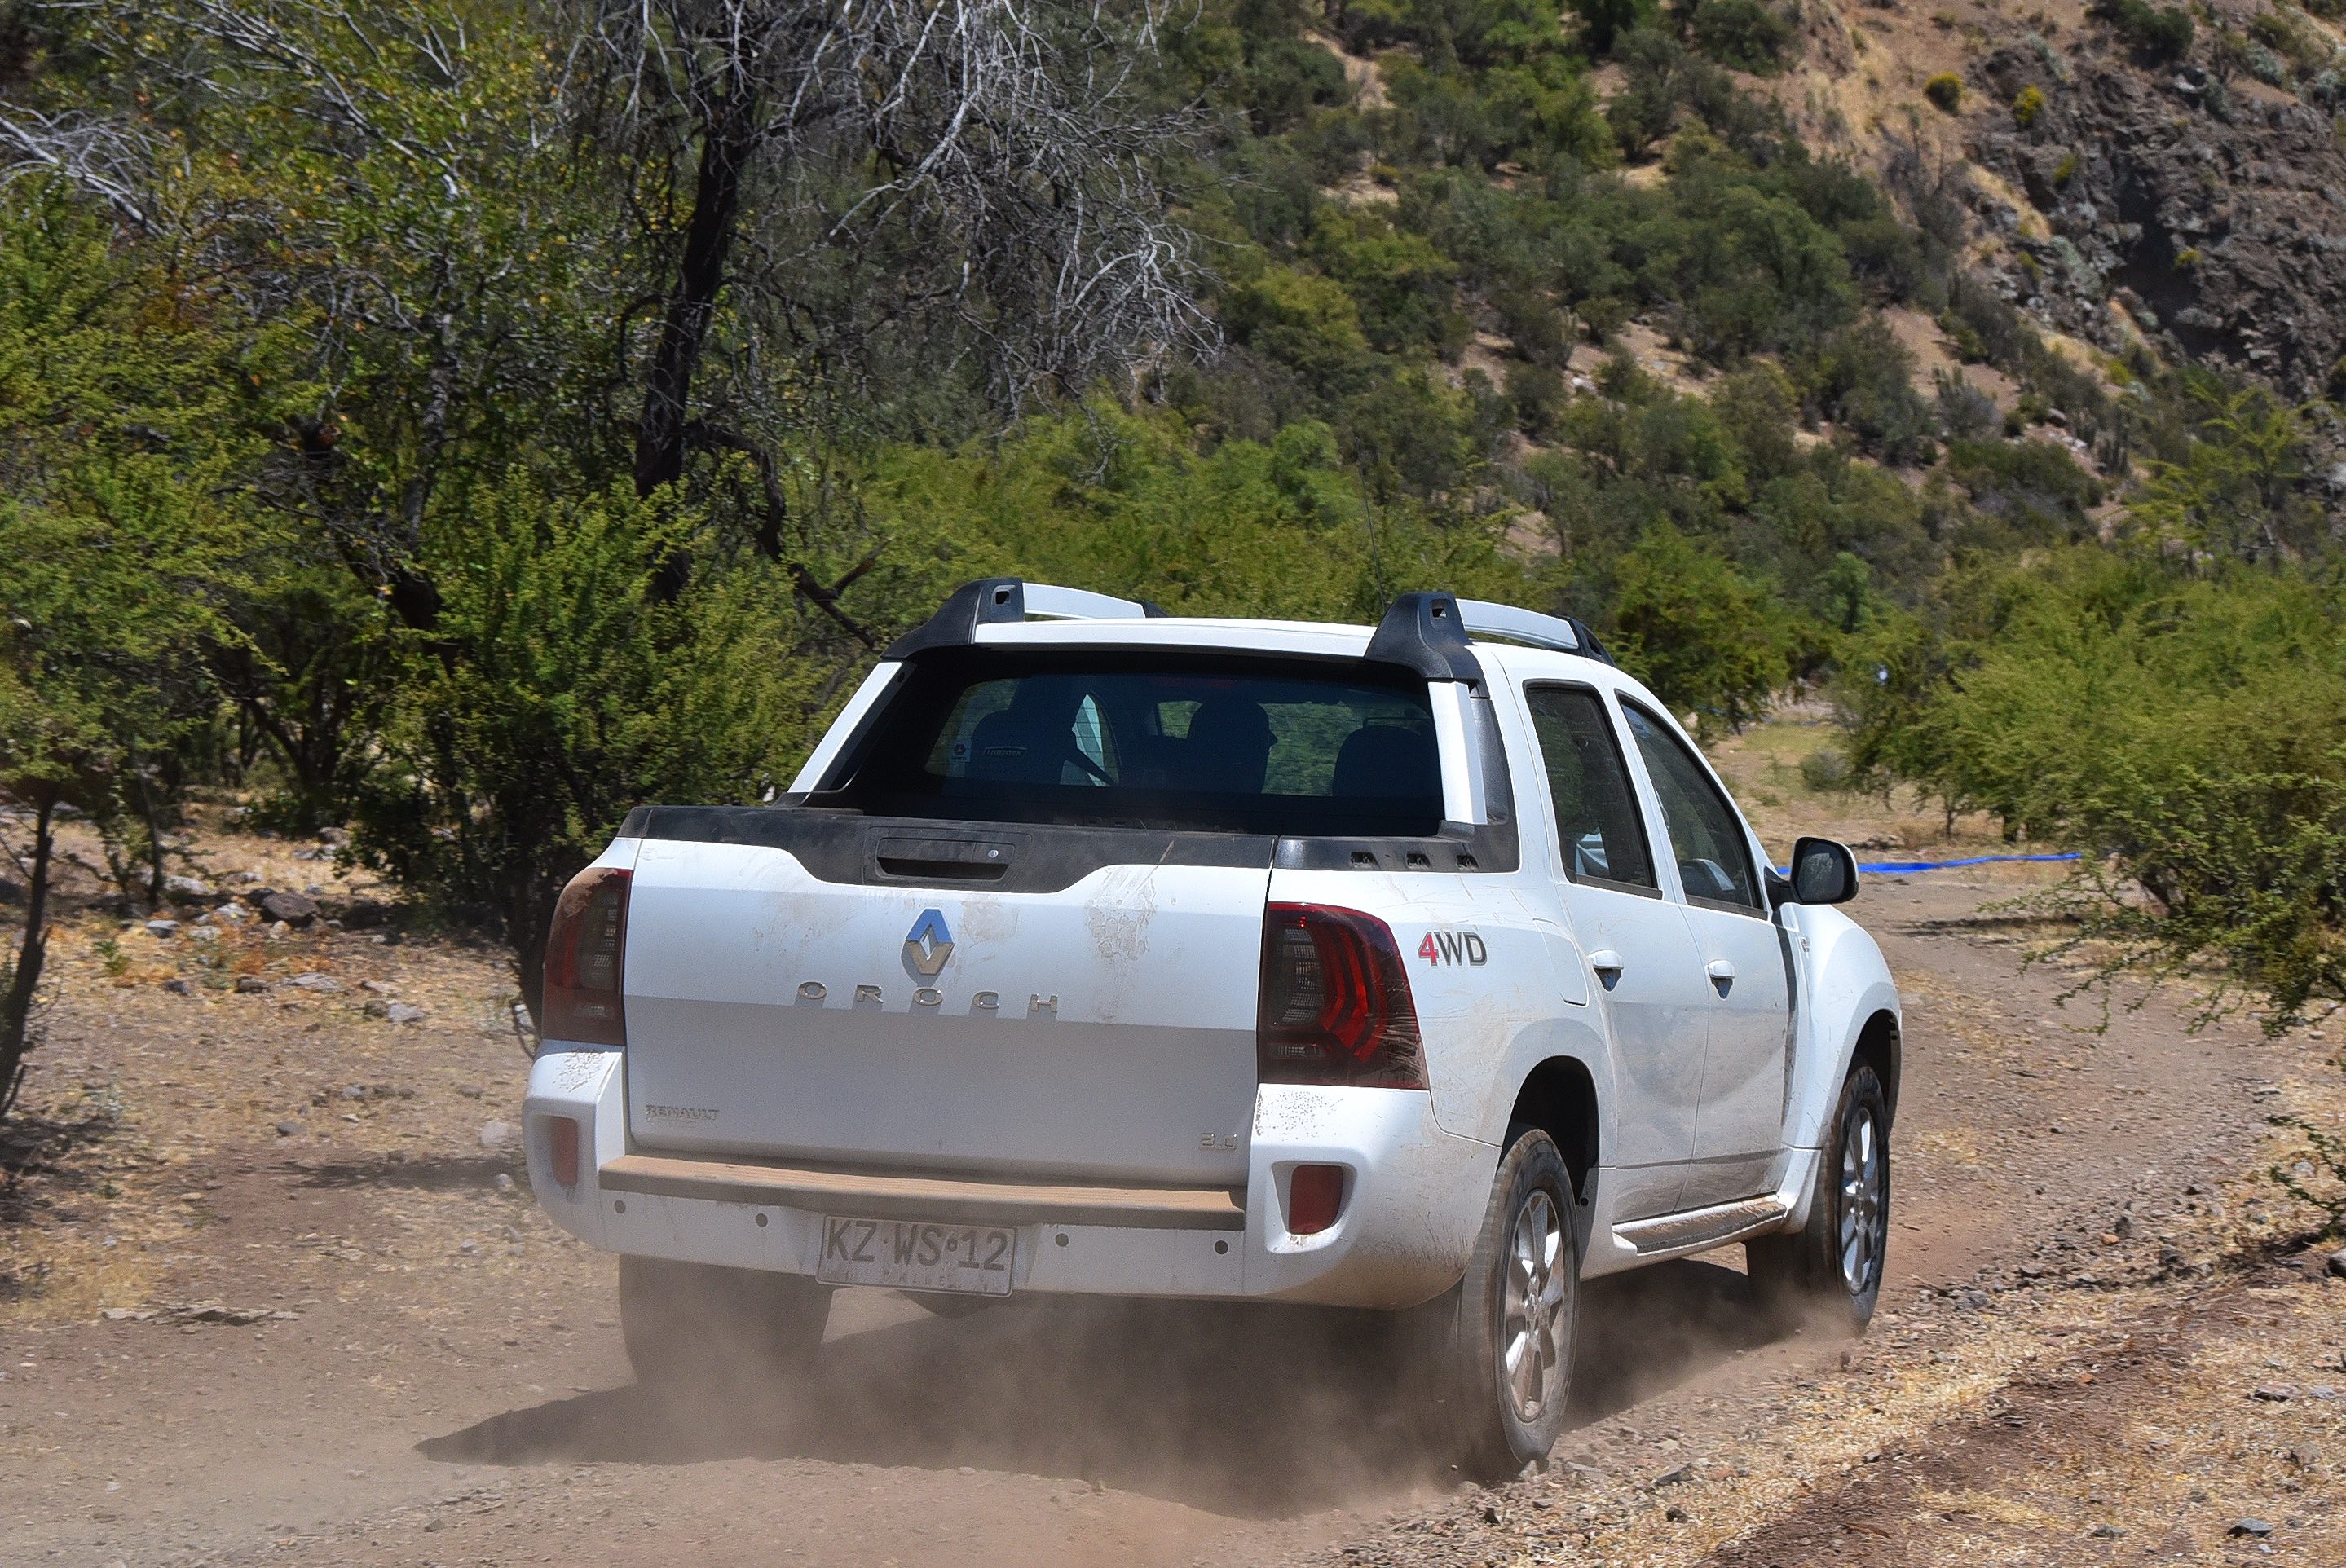 Teste CARPLACE: Oroch 2.0 - picape Duster convence mais que o SUV